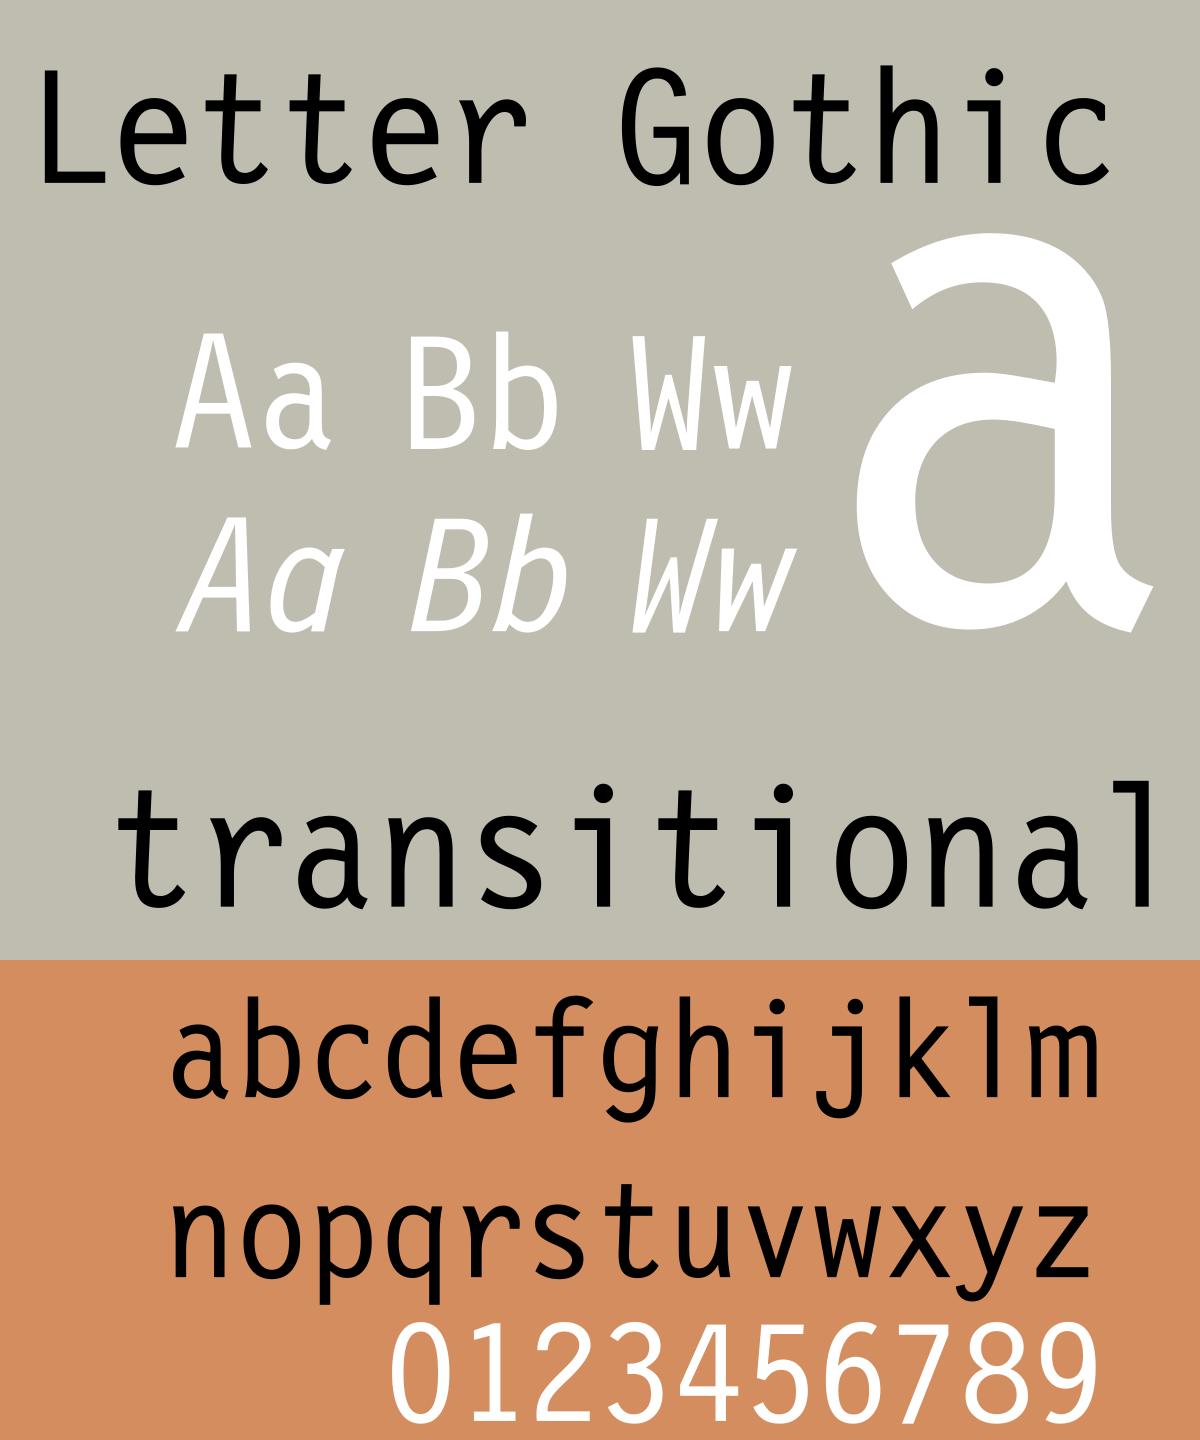 Letter Gothic - Wikipedia